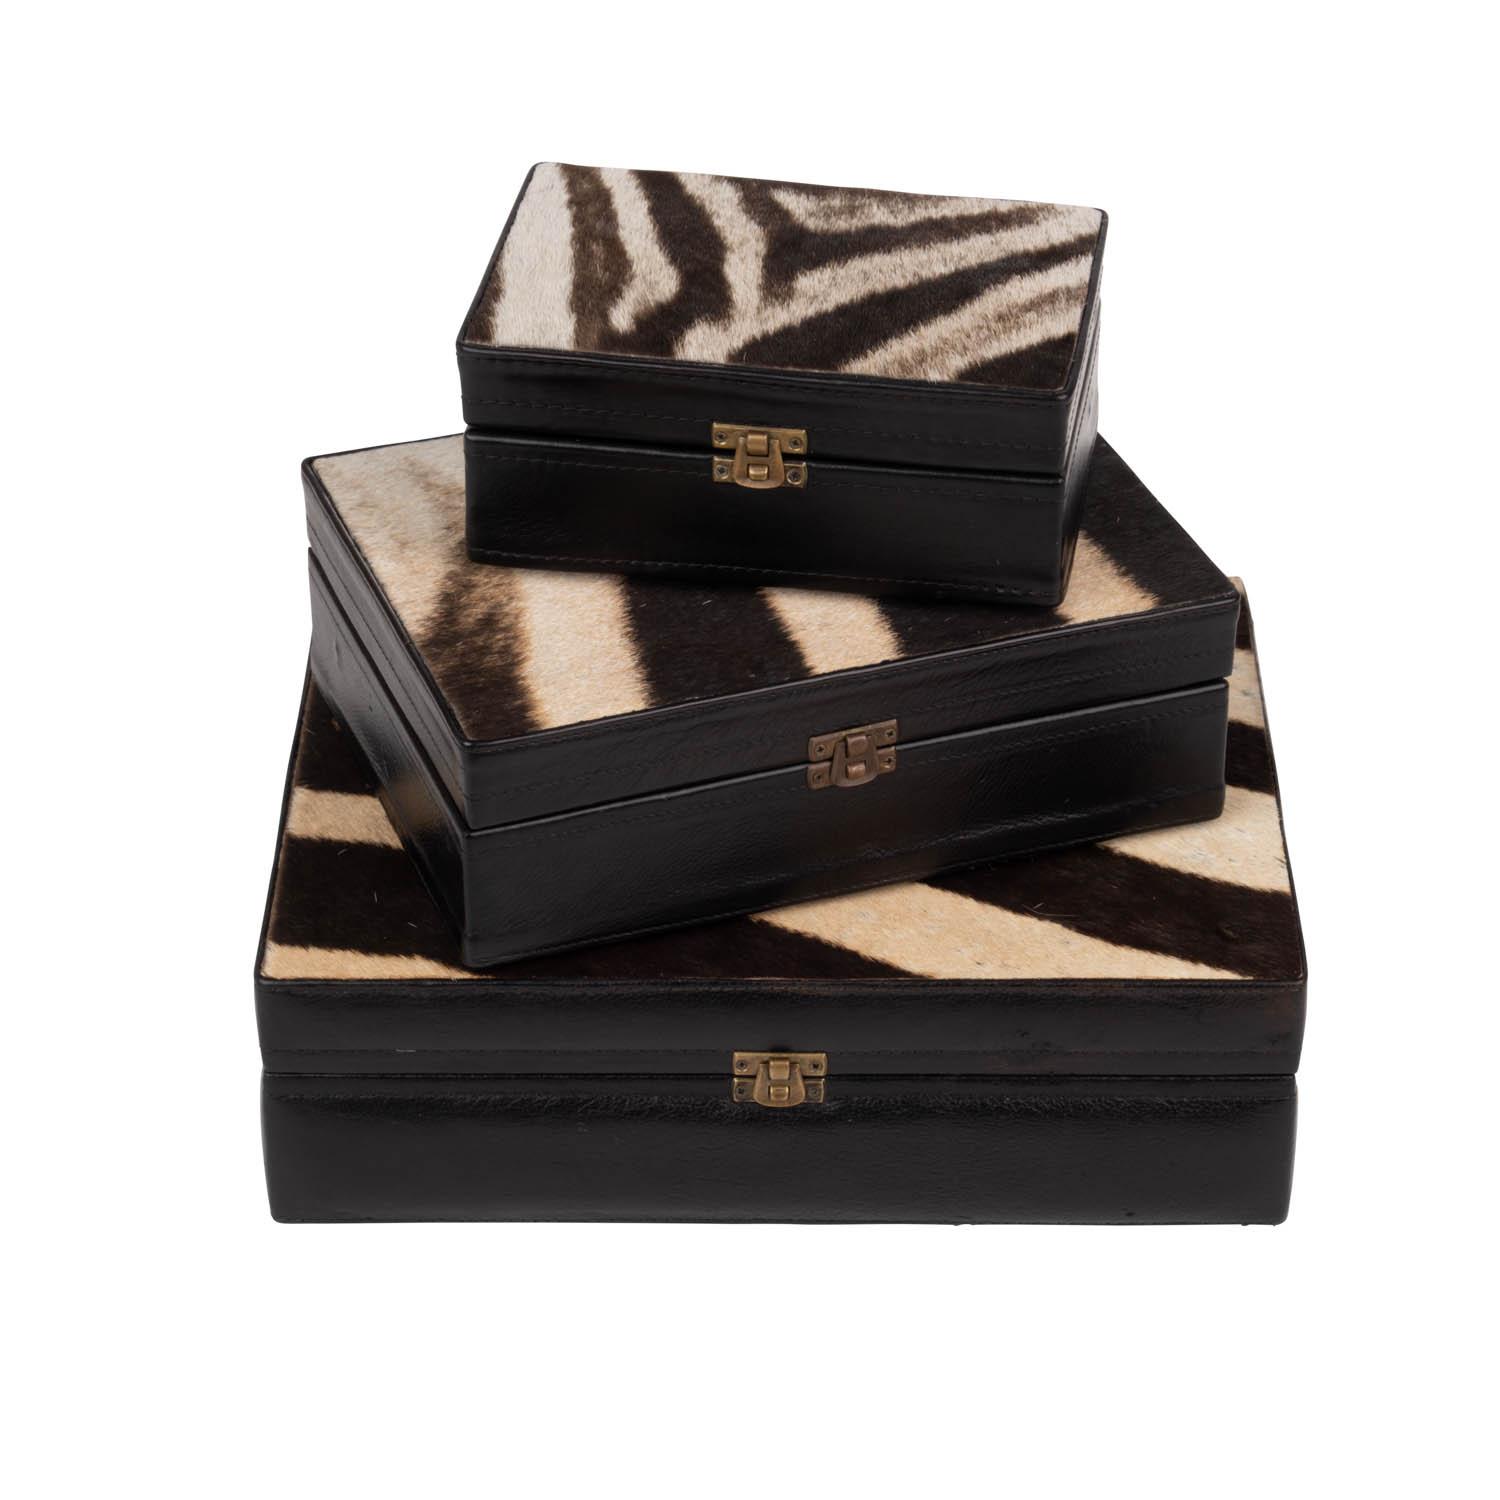 Zebra Hide & Leather Box - Medium